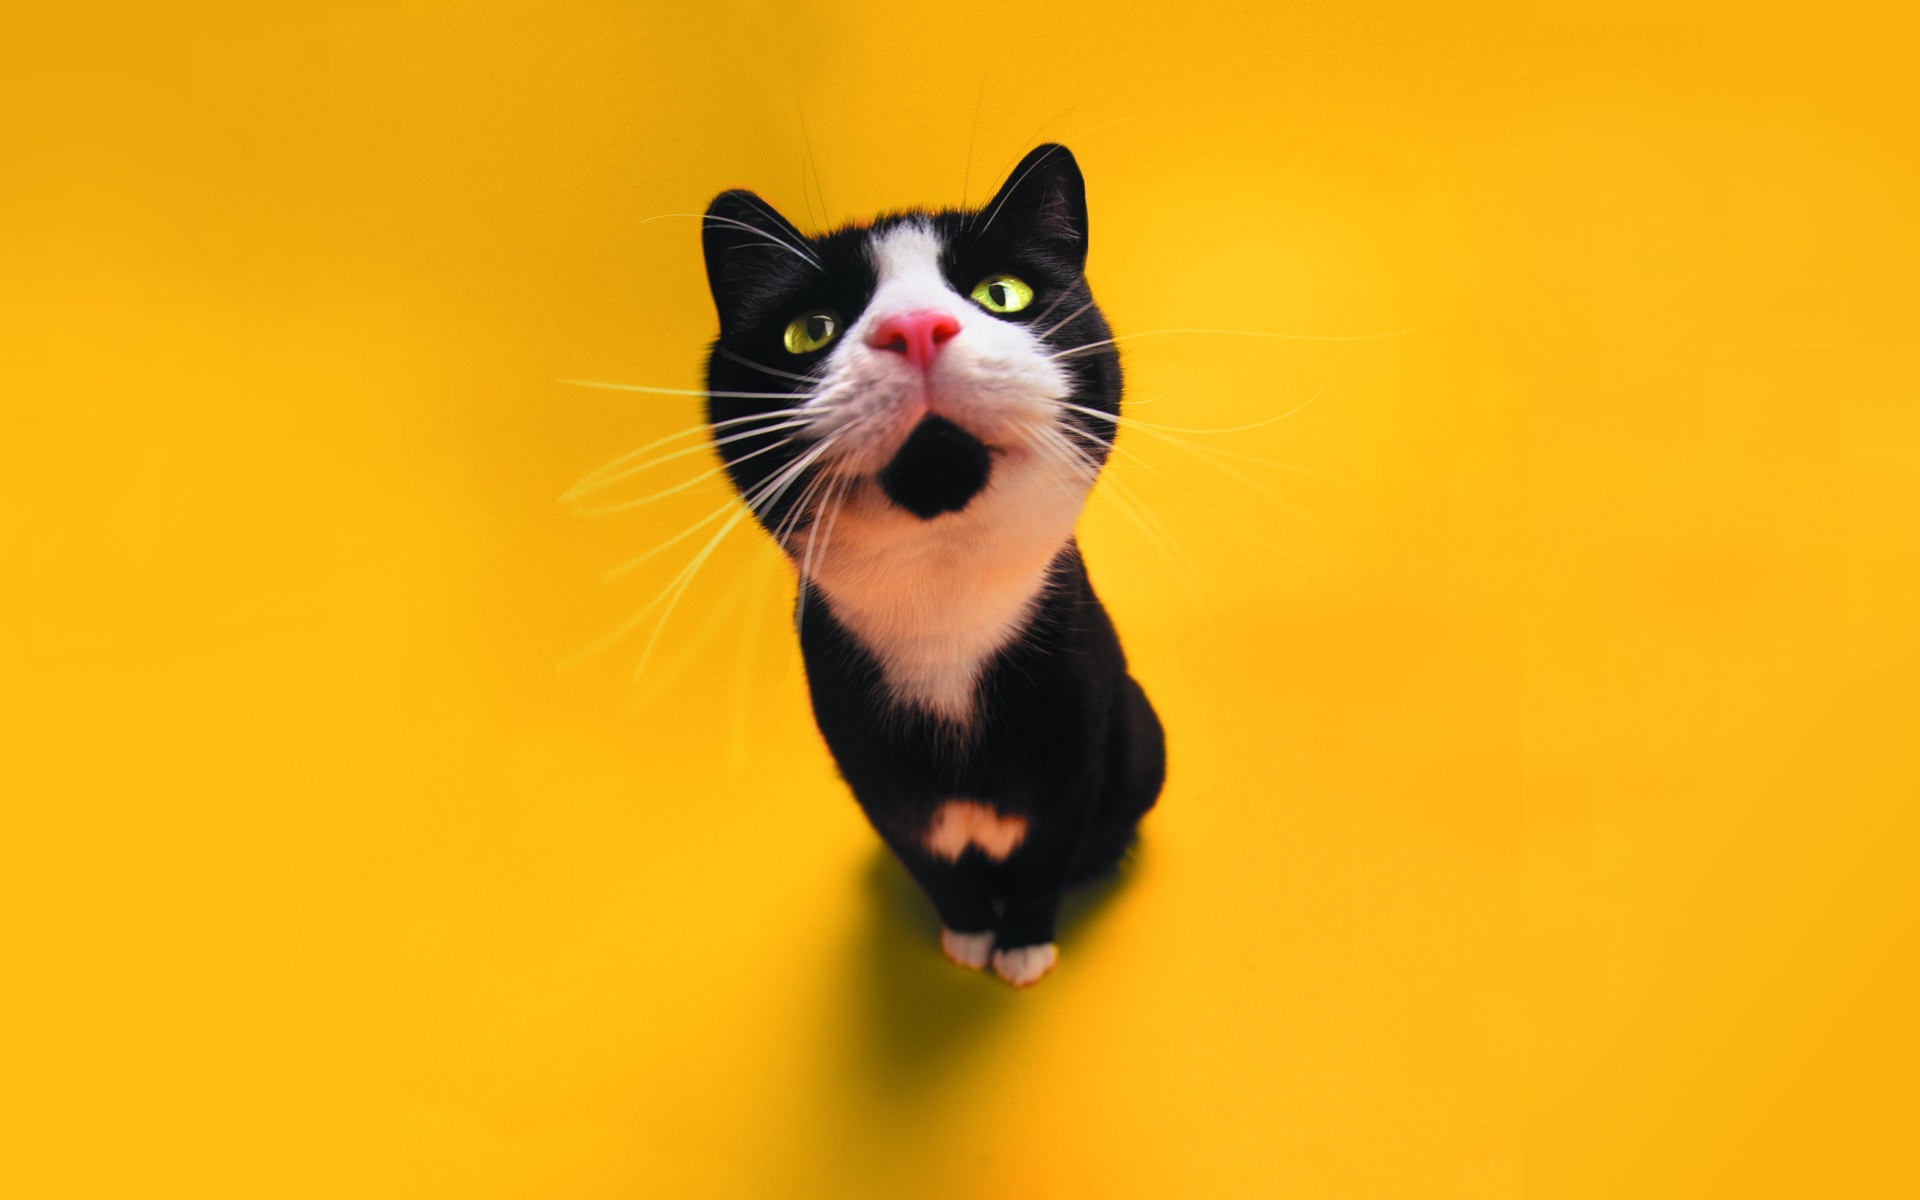 yellow, cats - desktop wallpaper